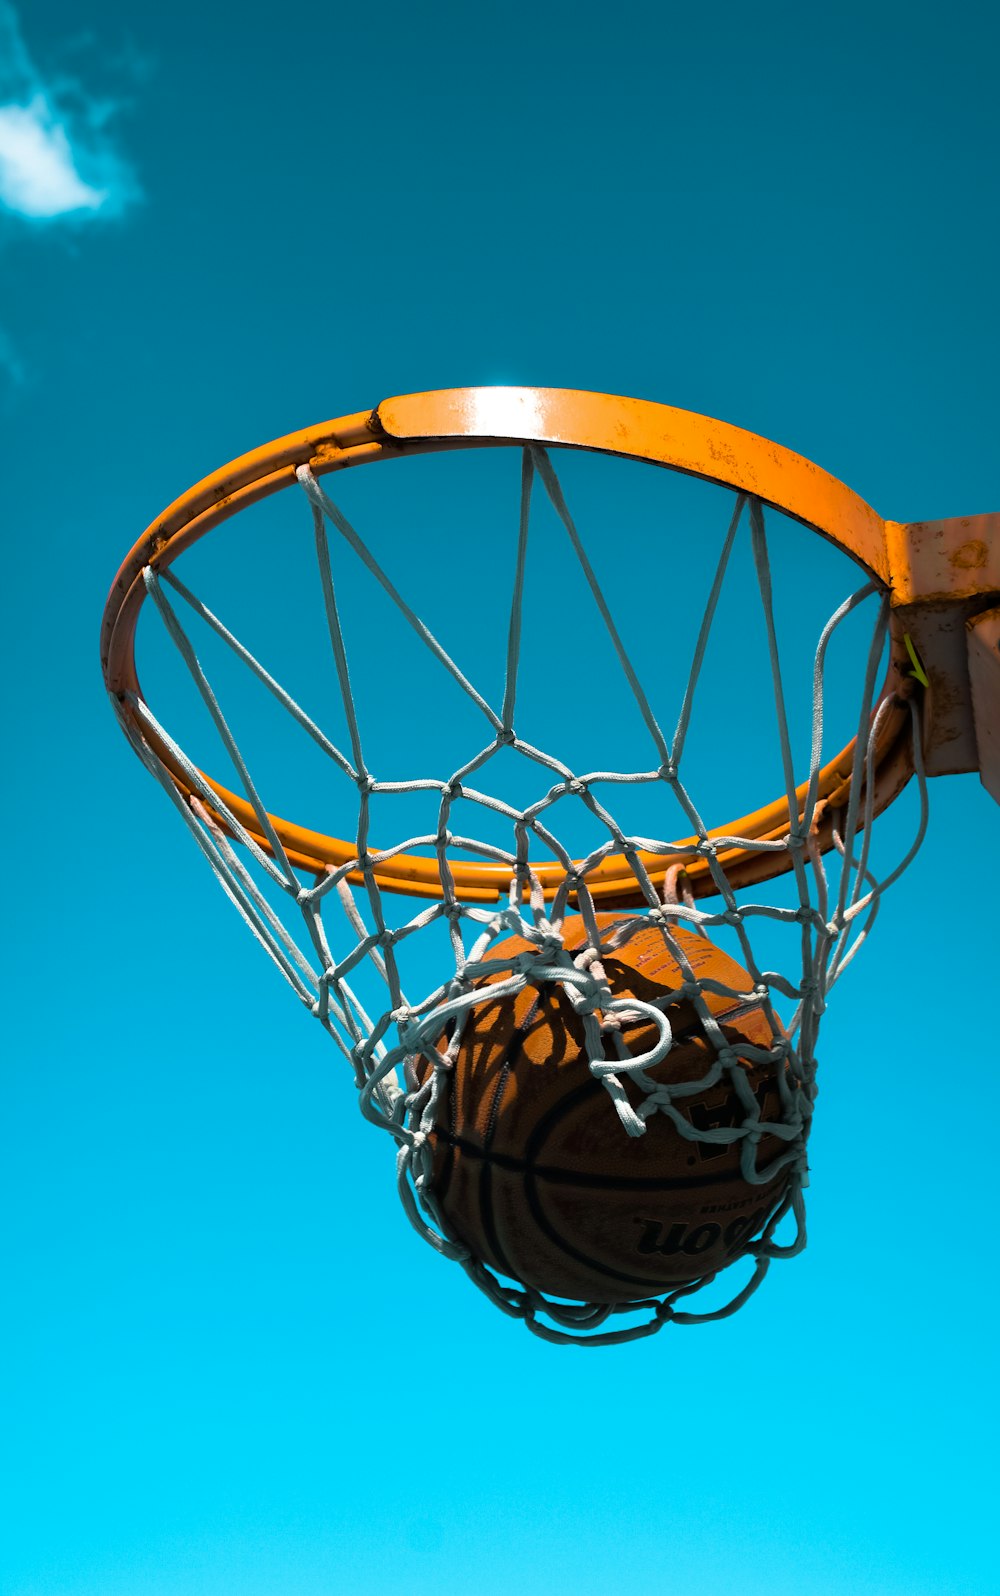 Basketball auf Korb mit Netz